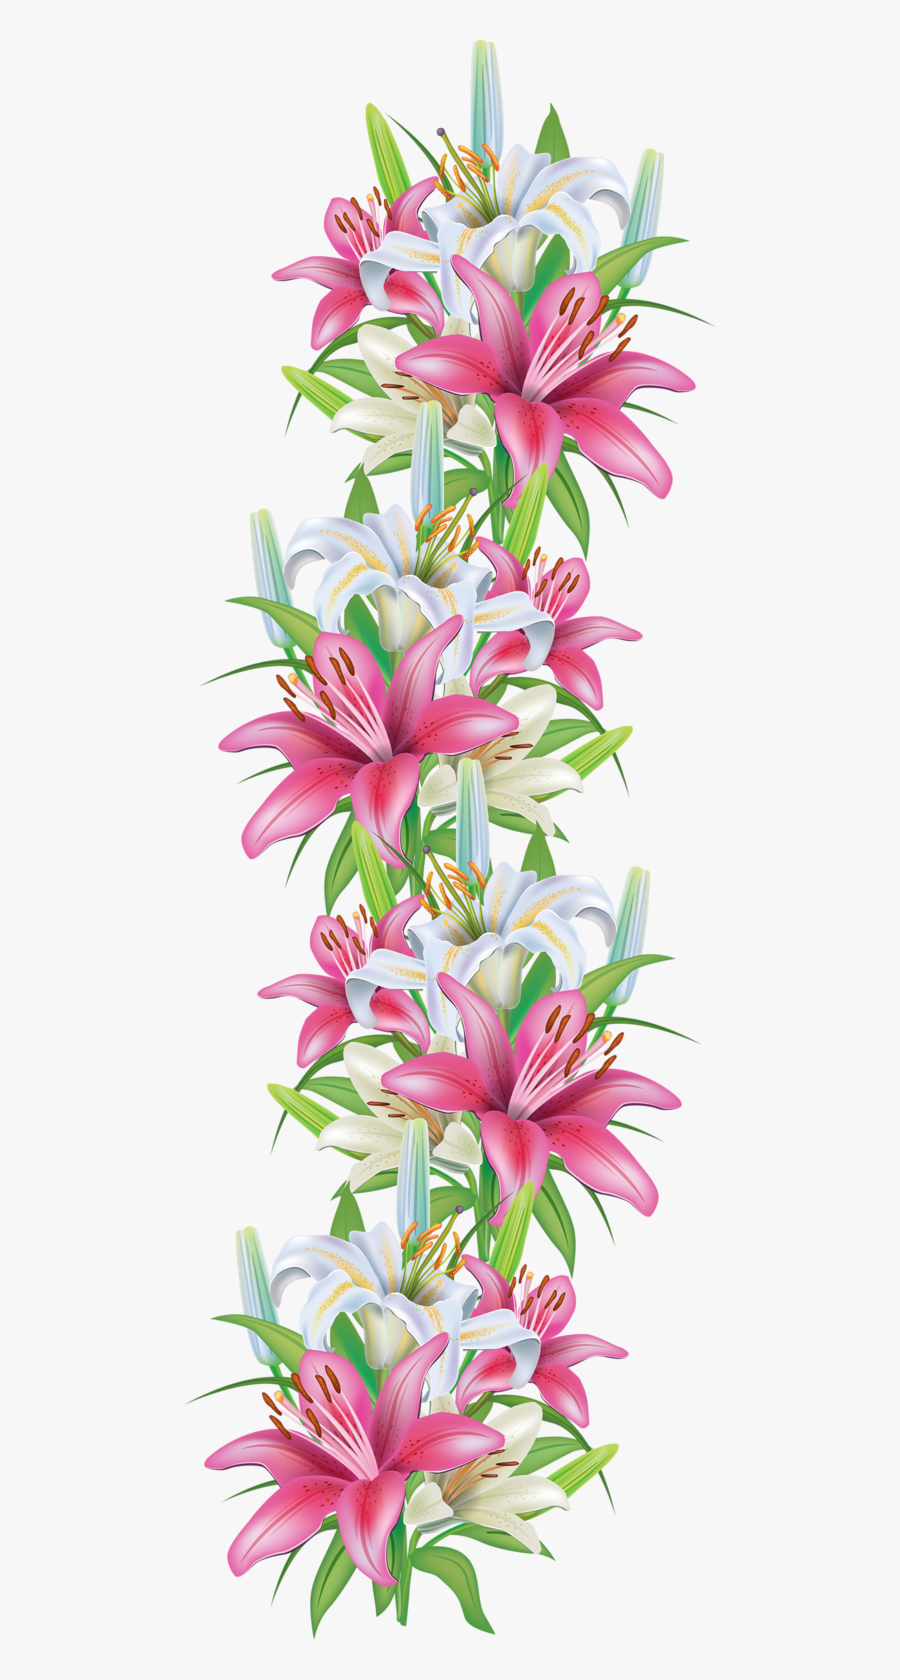 Transparent Lily Flower Png - Pink Lily Flower Border, Transparent Clipart